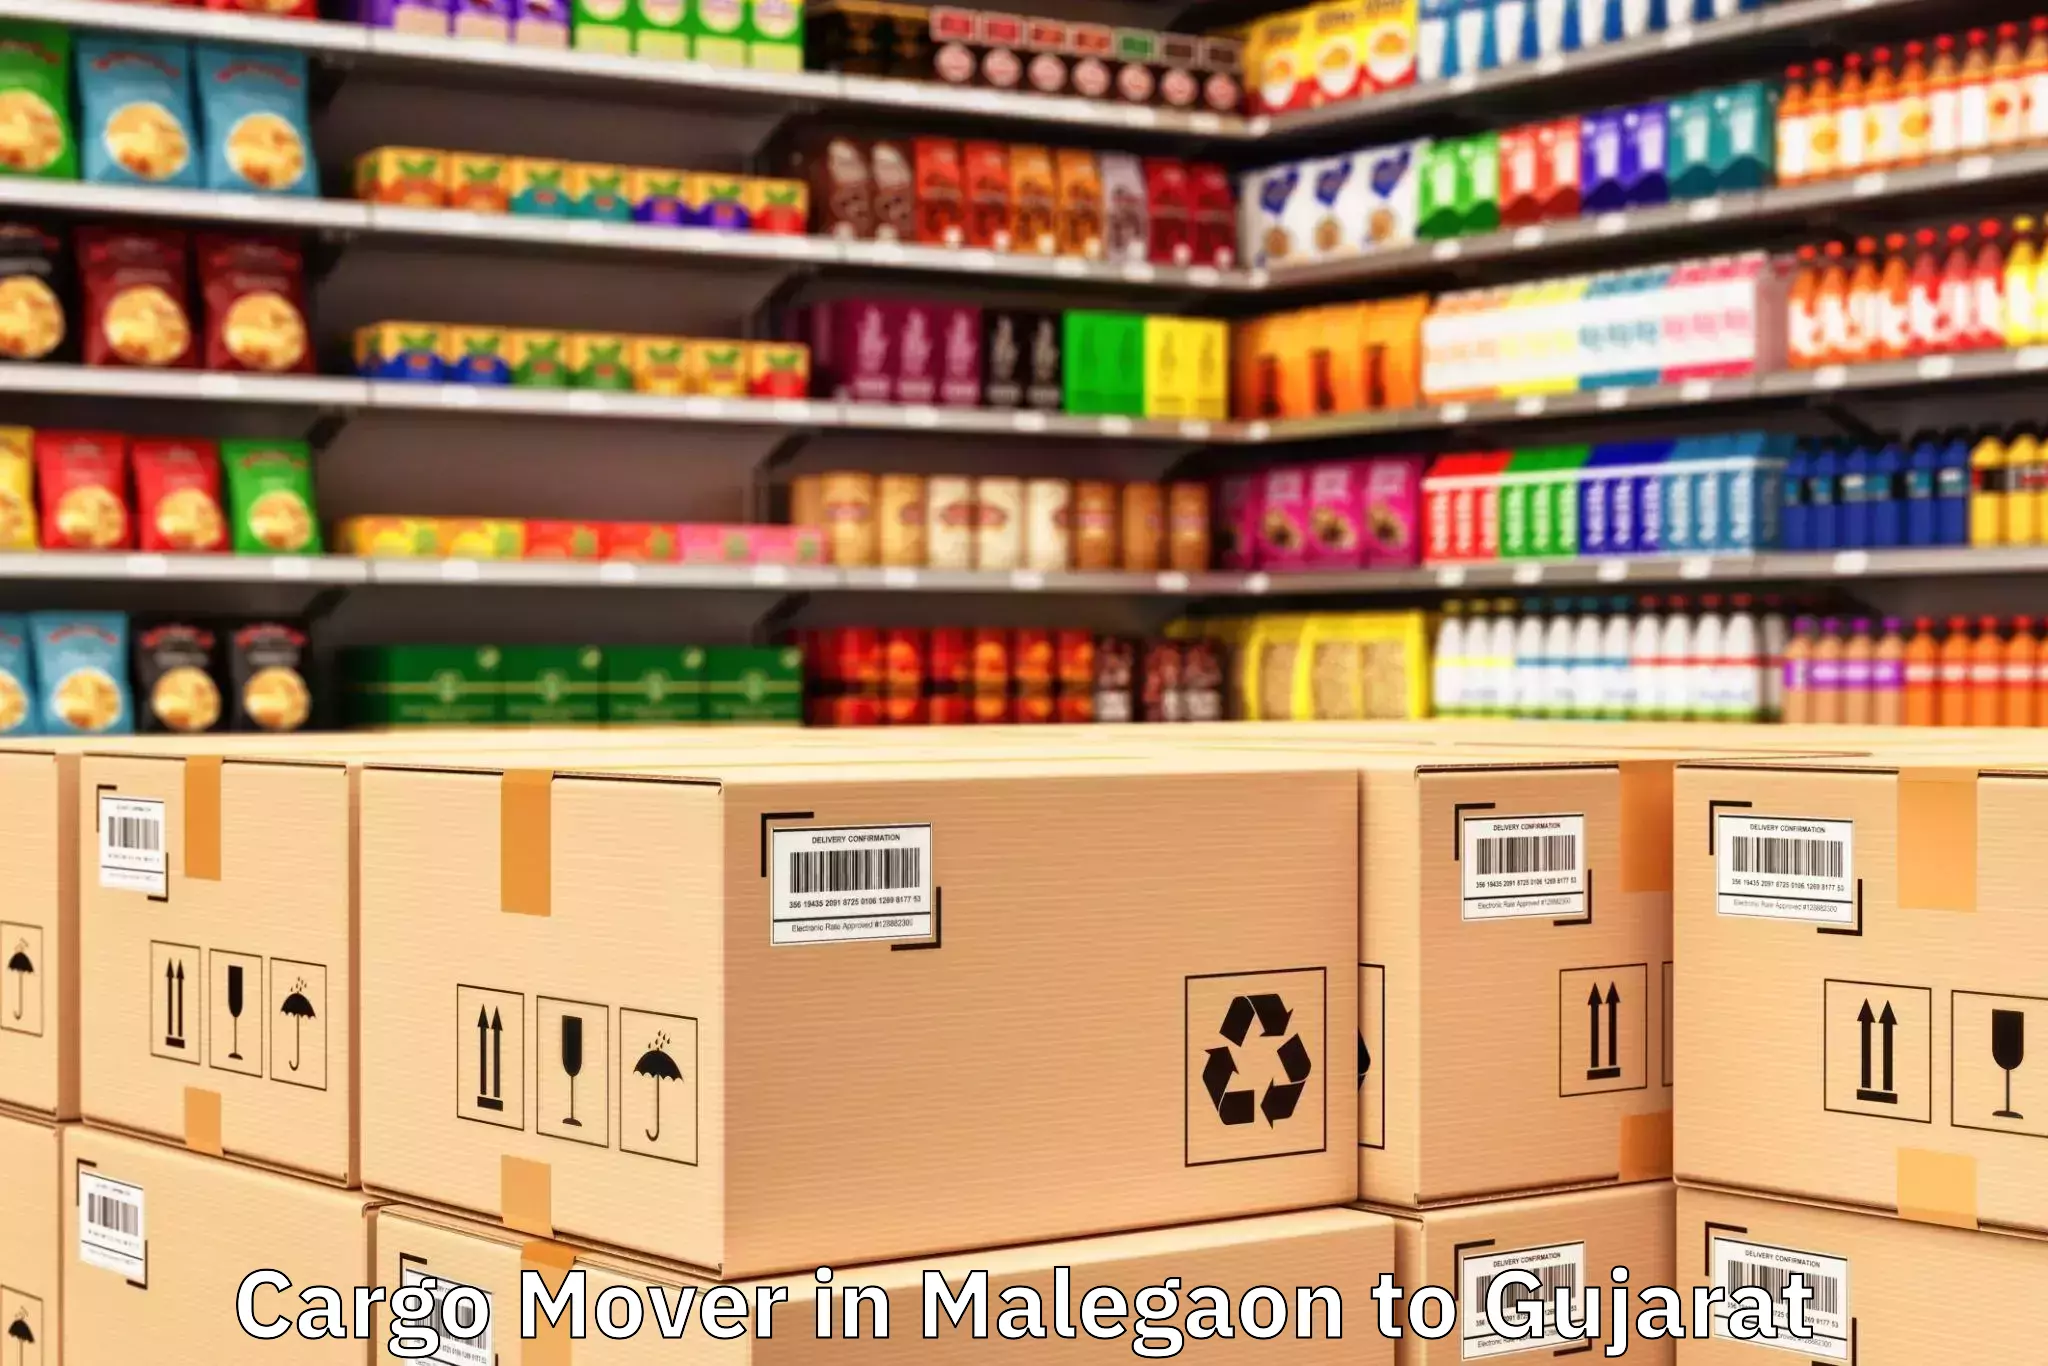 Malegaon to Gujarat Cargo Mover